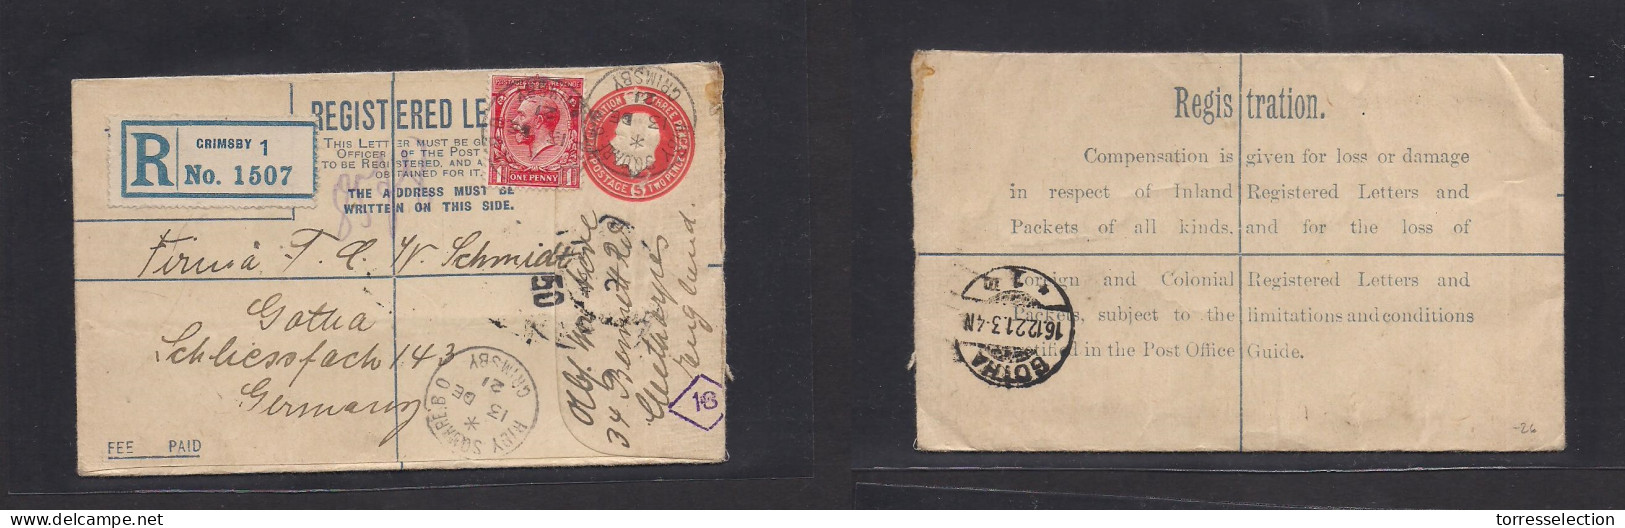 Great Britain - Stationery. 1921 (13 Dec) Grimsby - Germany, Gotha (16 Dec) Registered 2d Red Stat Env + Adtl Cds. Fine. - ...-1840 Prephilately